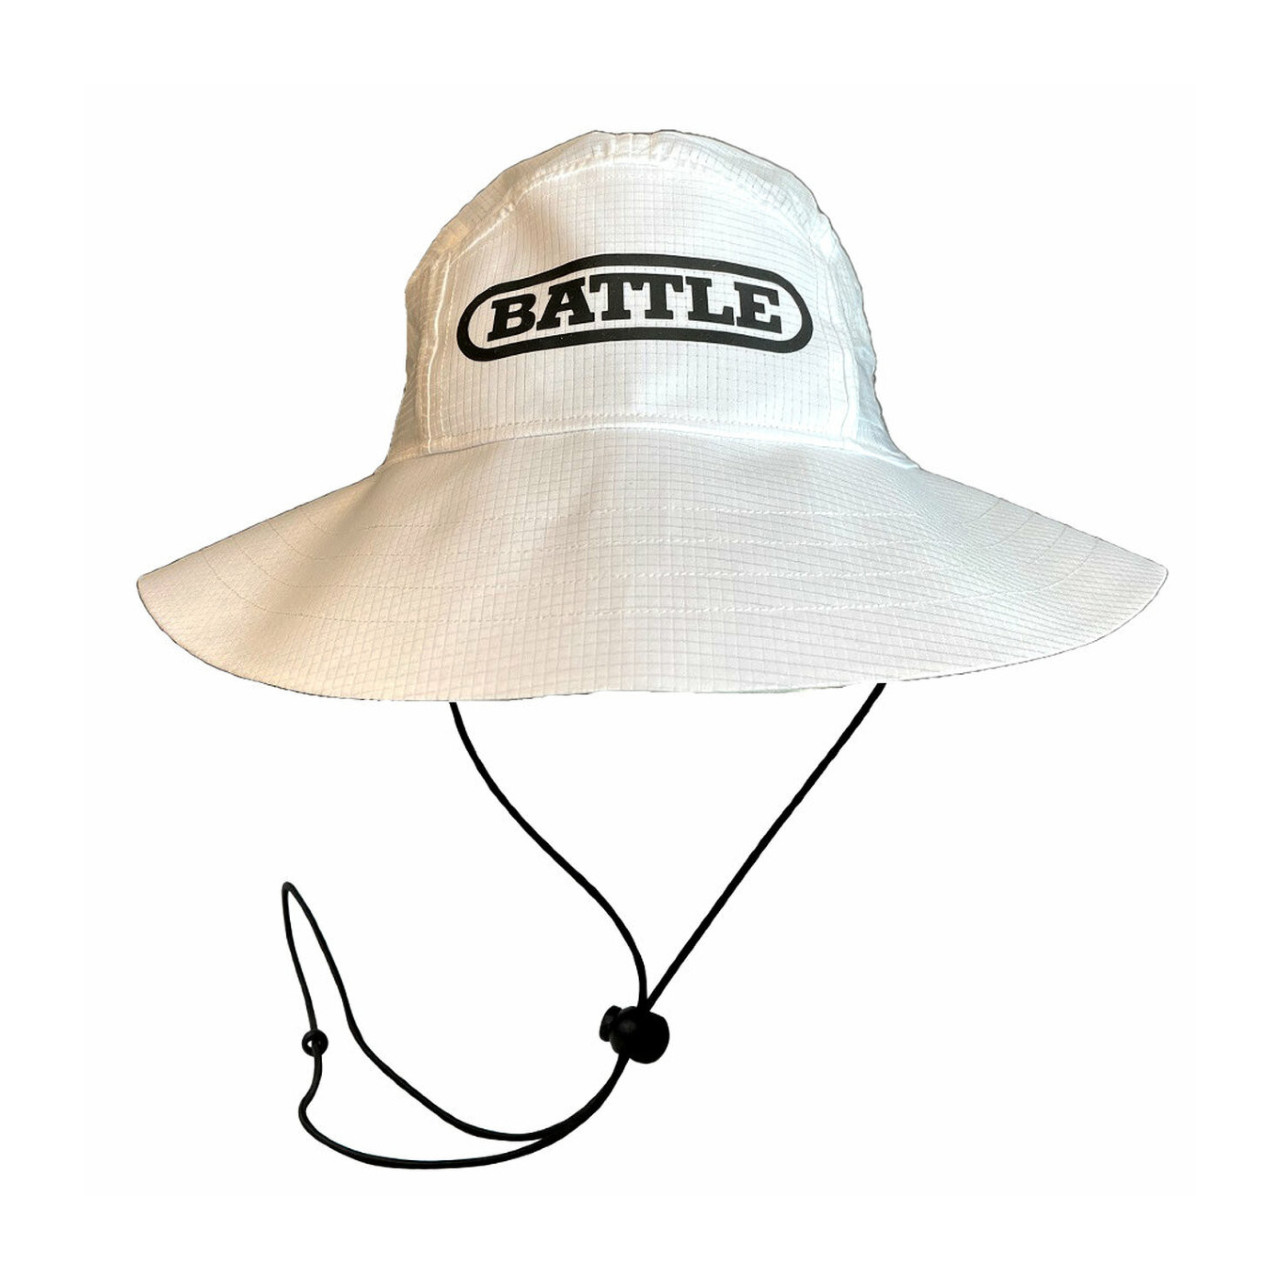 Battle Bucket Hat, Men's, White